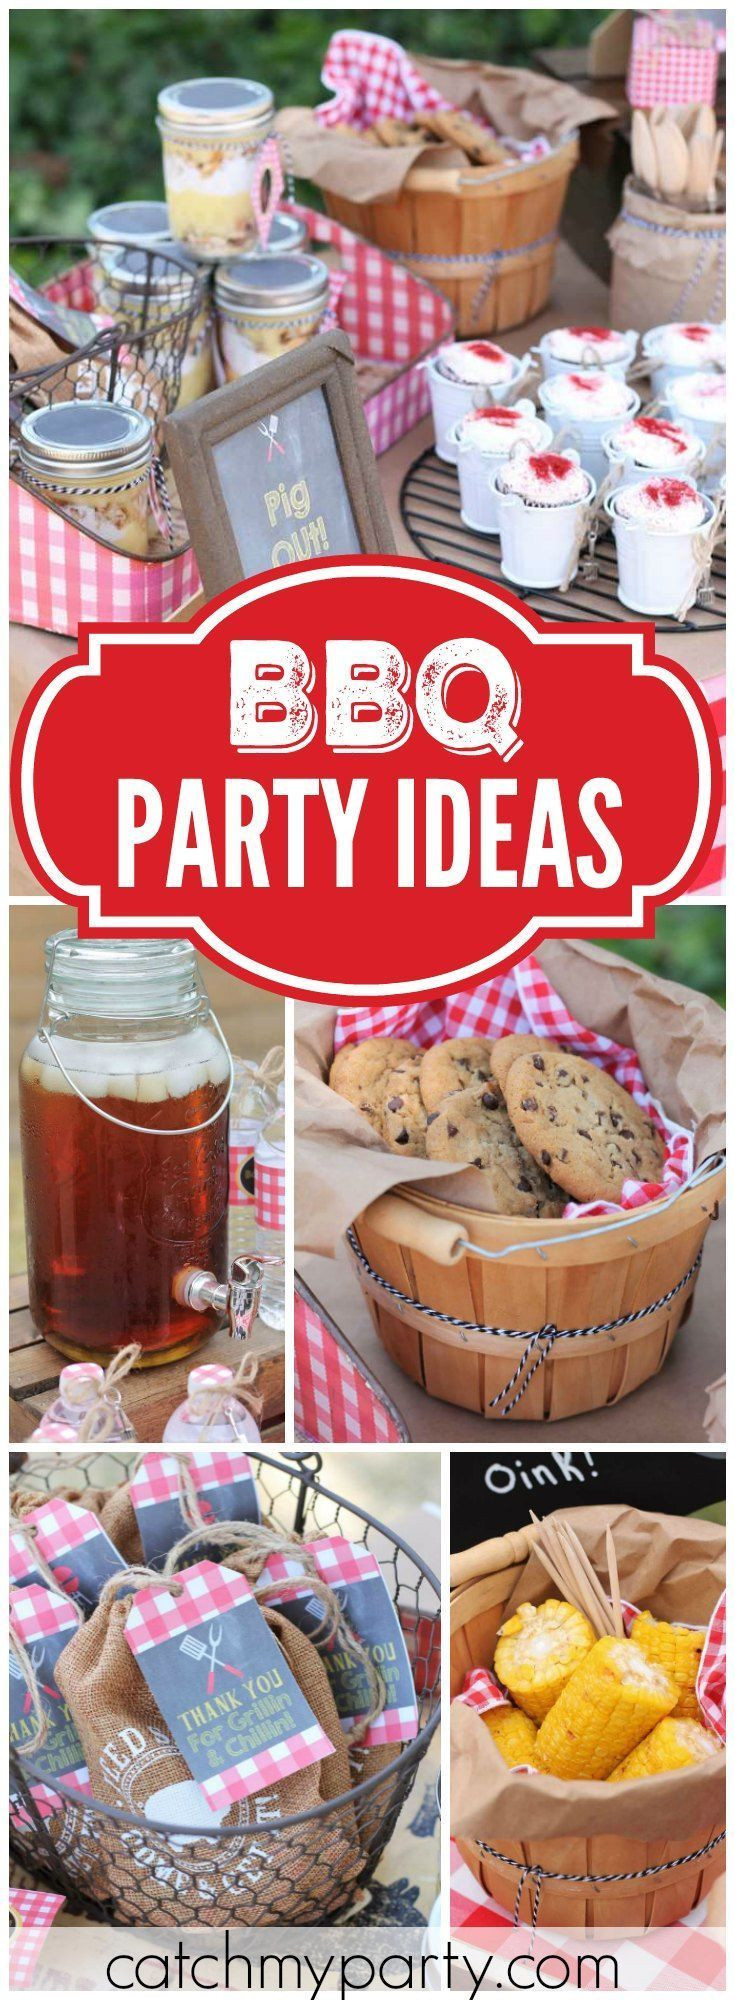 Summer Bbq Party Food Ideas
 Backyard BBQ Summer "Chillin & Grillin"